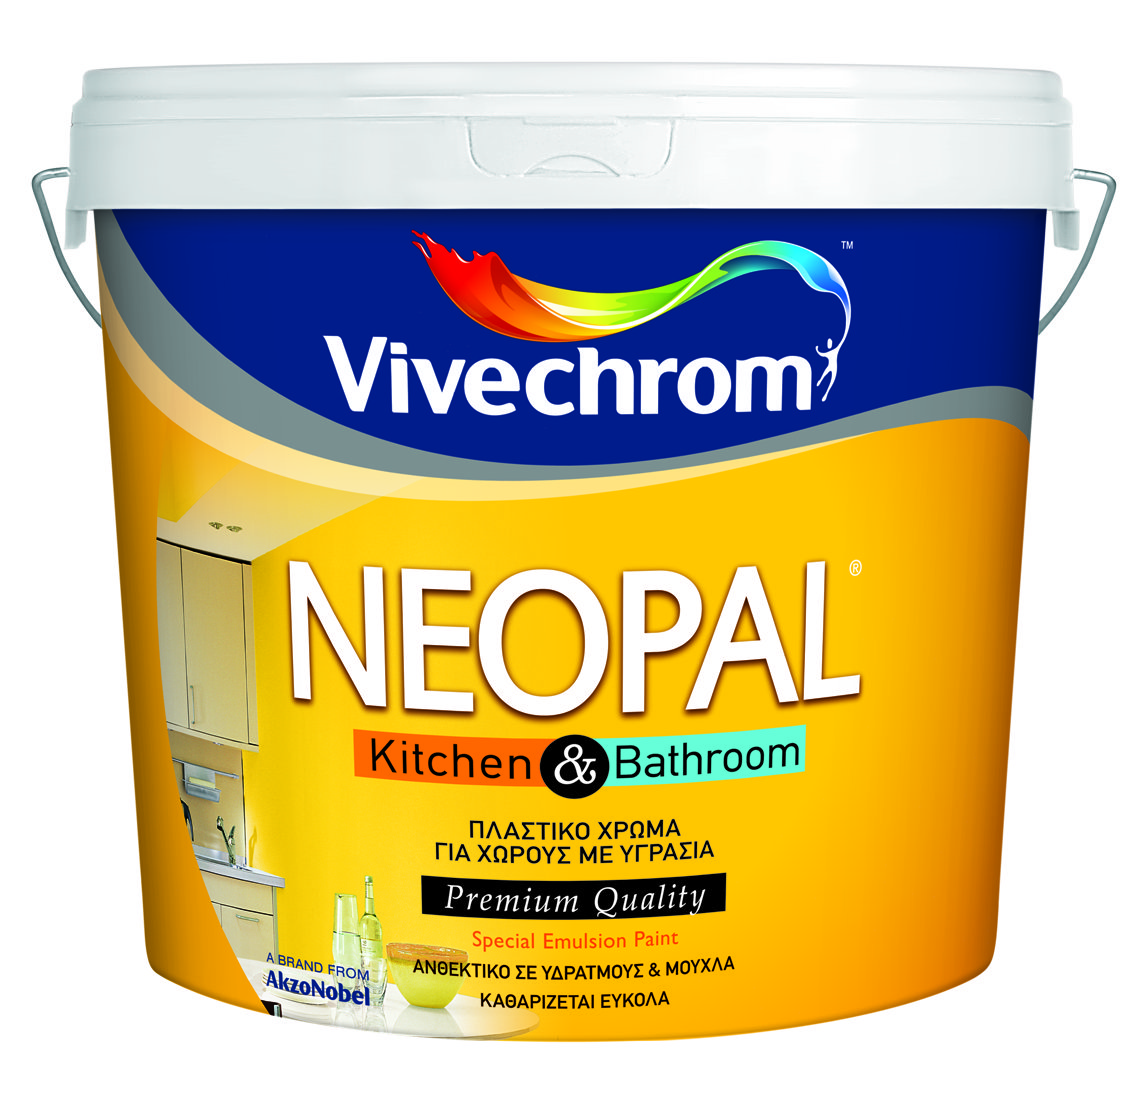 Vivechrom Neopal Kitchen & Bathroom Αντιμικροβιακό Χρώμα για Χώρους με Υγρασία Βάση D 1L